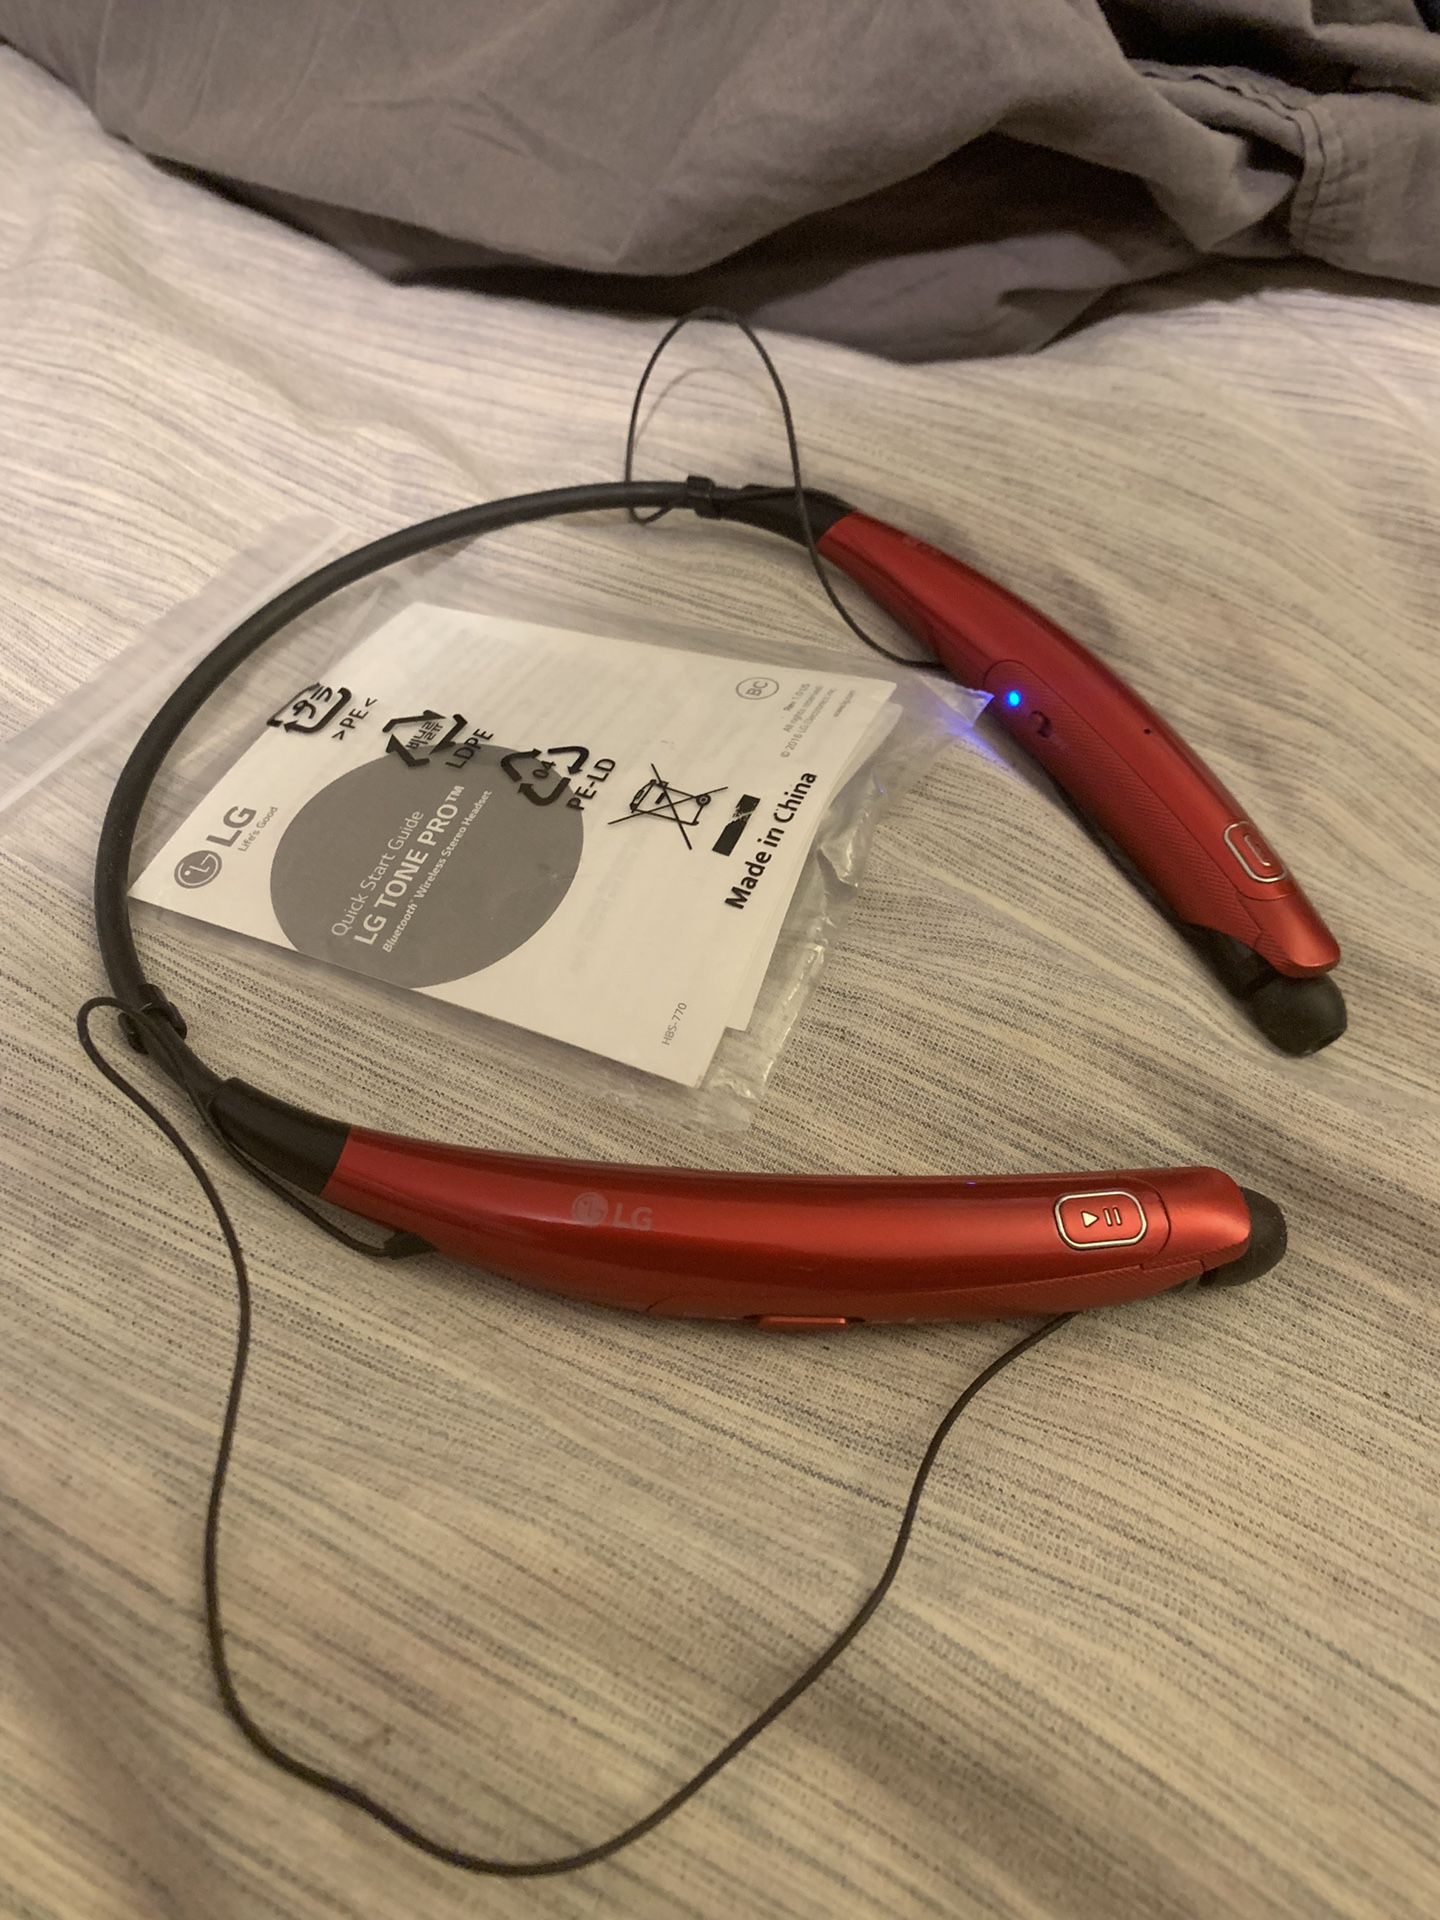 LG Tone Pro Bluetooth Wireless Headset